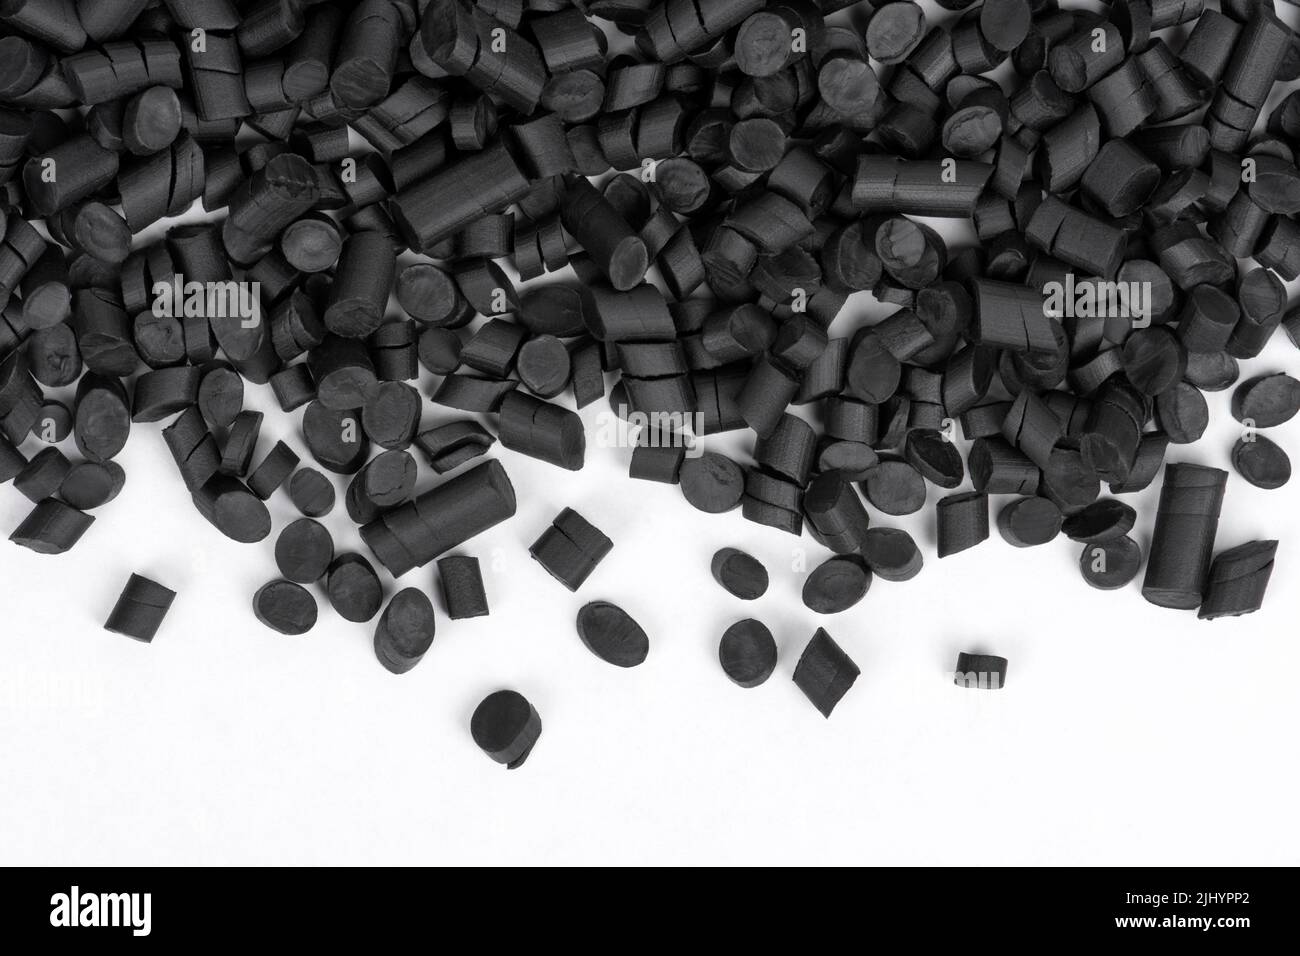 Nahaufnahme von schwarzem Gummigranulat Stockfotografie - Alamy